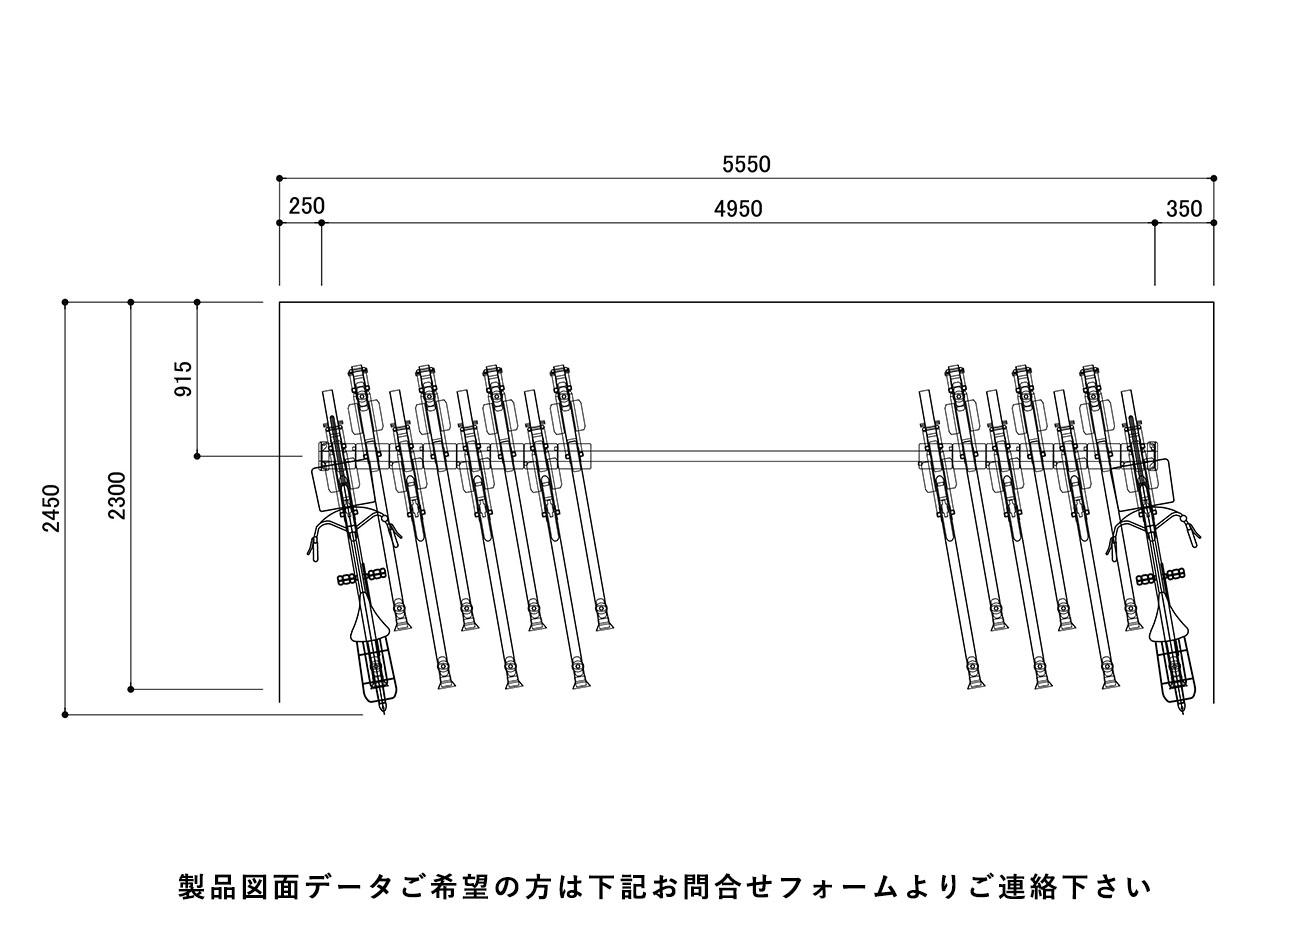 垂直2段式駐輪機：SD-SV2の駐輪場平面図（下段）。